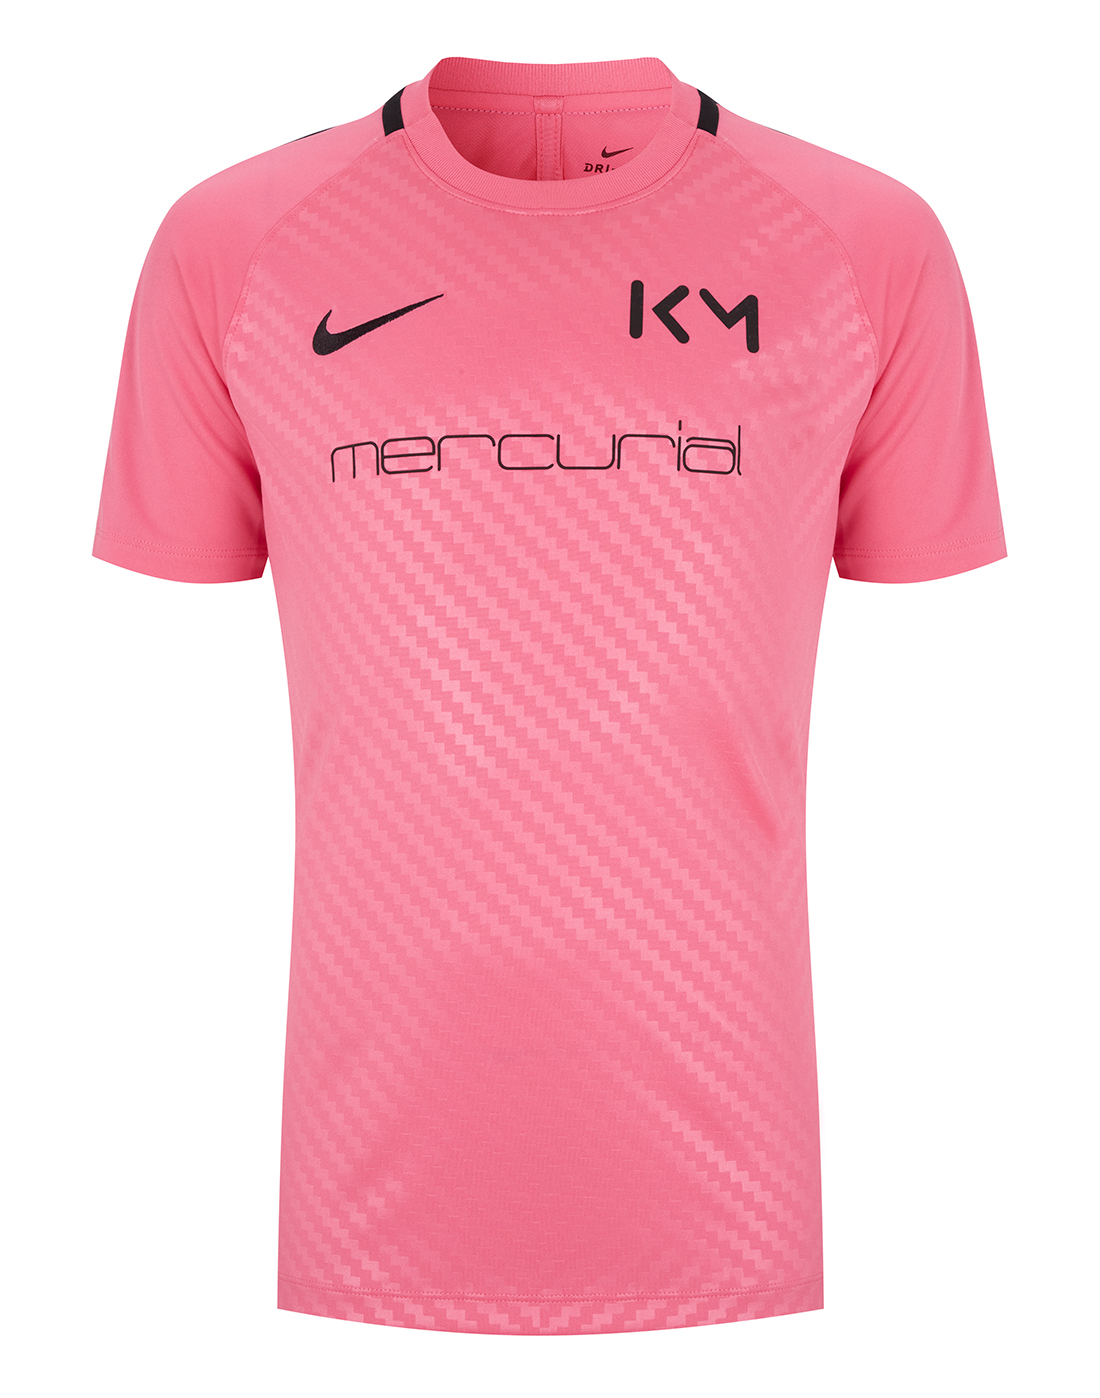 Nike Older Kids Mbappe T-Shirt Pink | Life Style Sports